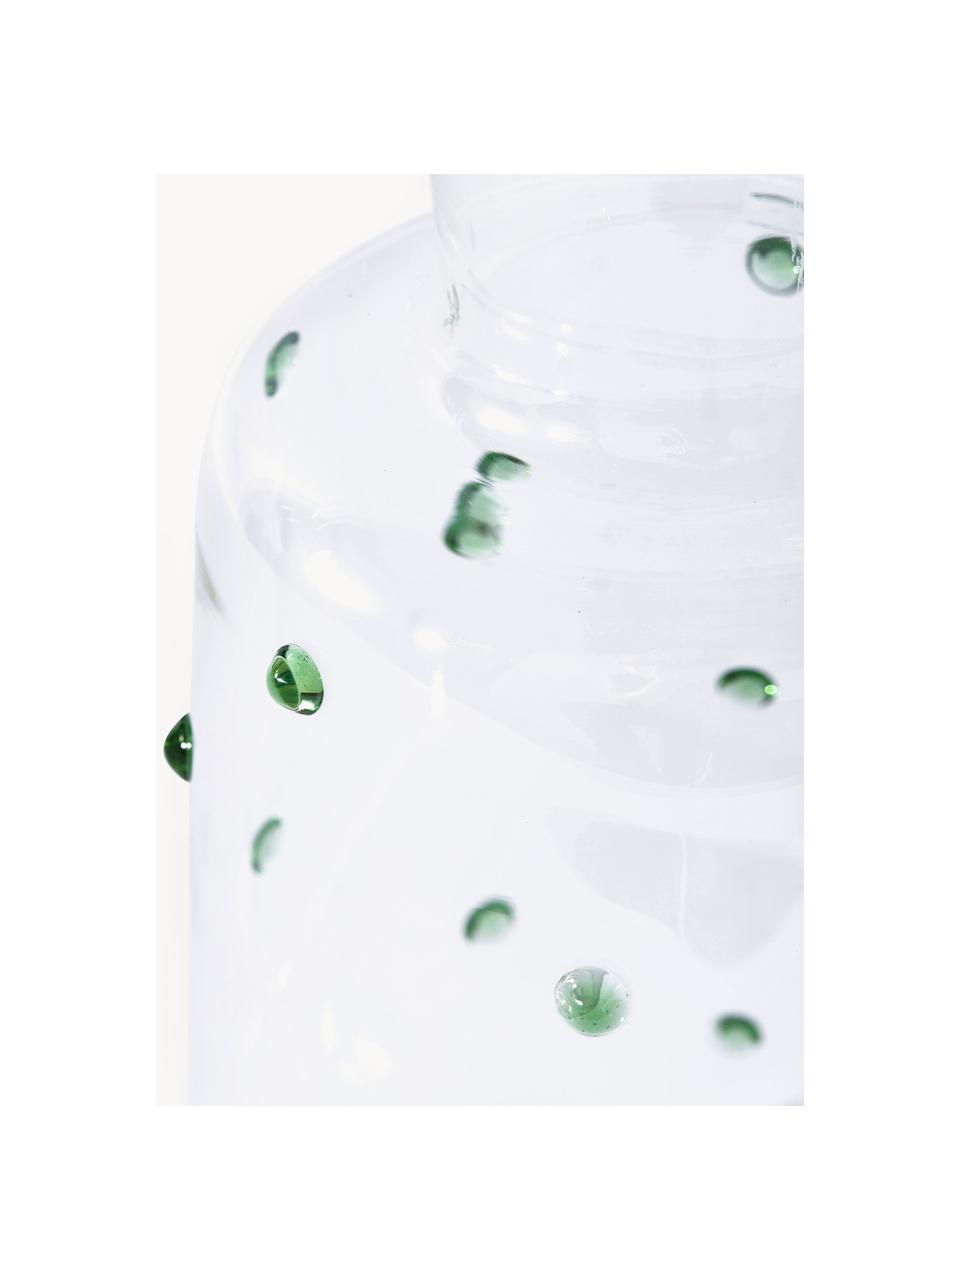 Mondgeblazen karaf Nob, 2 L, Mondgeblazen glas, Transparant, groen, 2 l